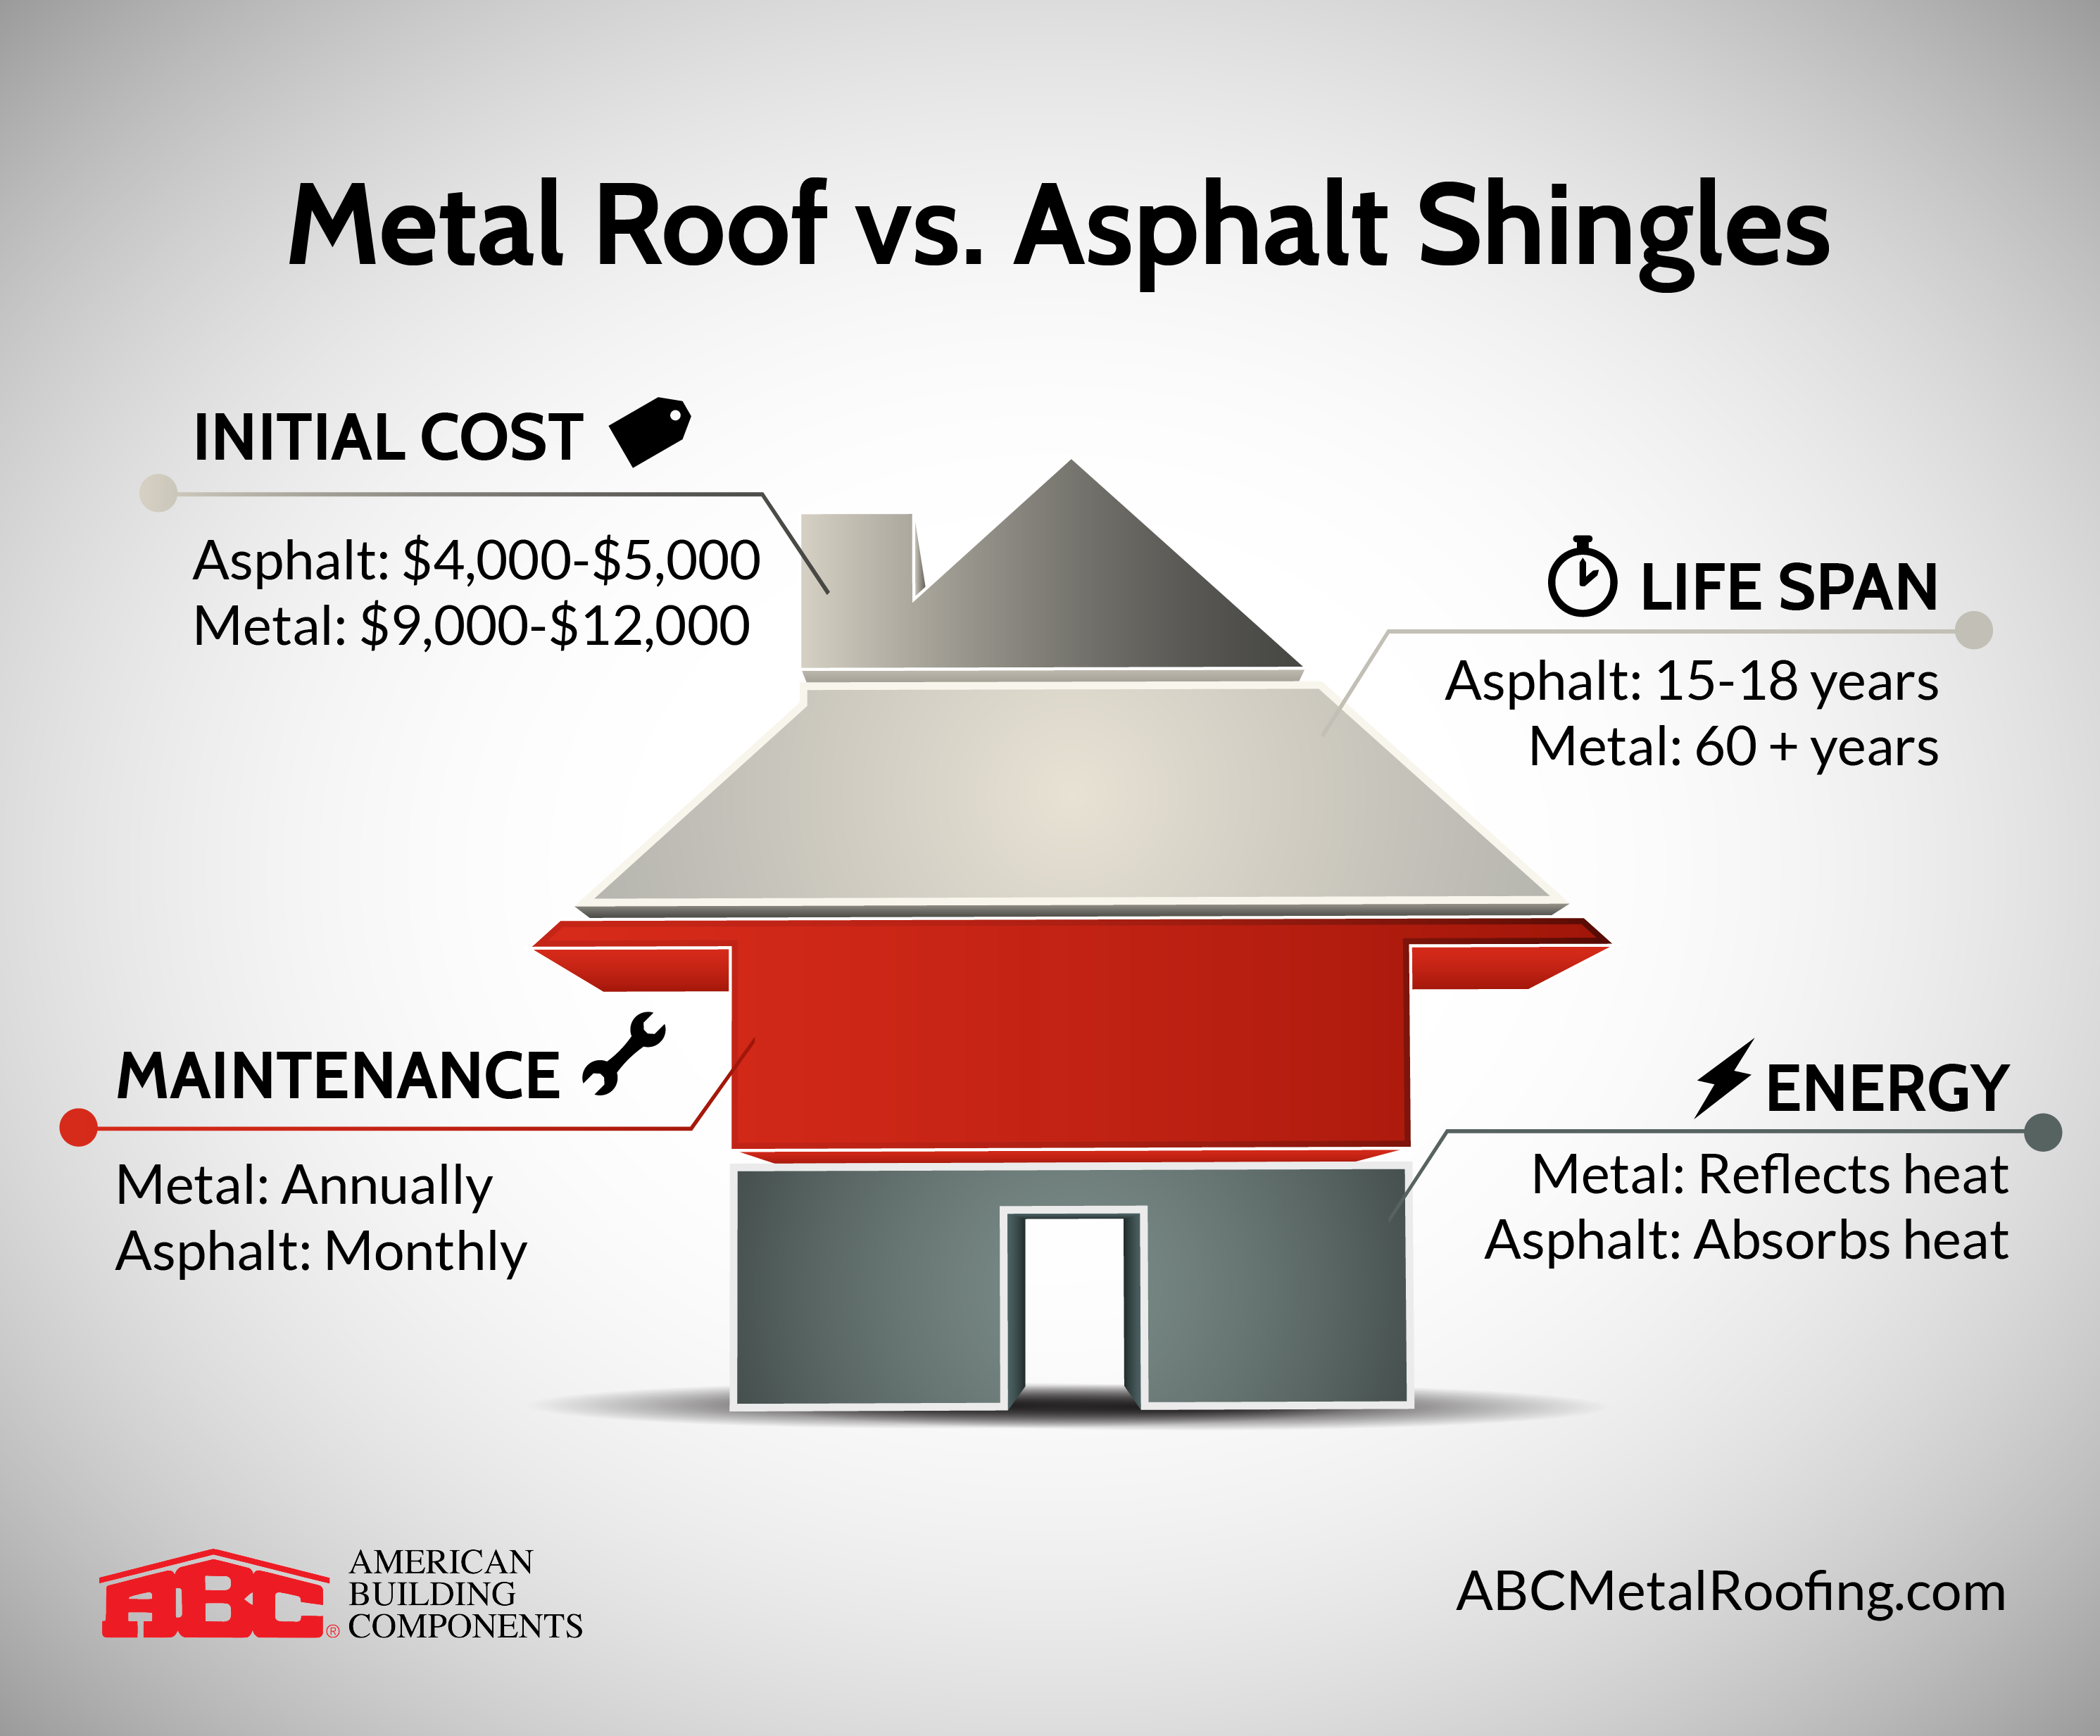  Metal Roof vs Asphalt Shingles Infographic